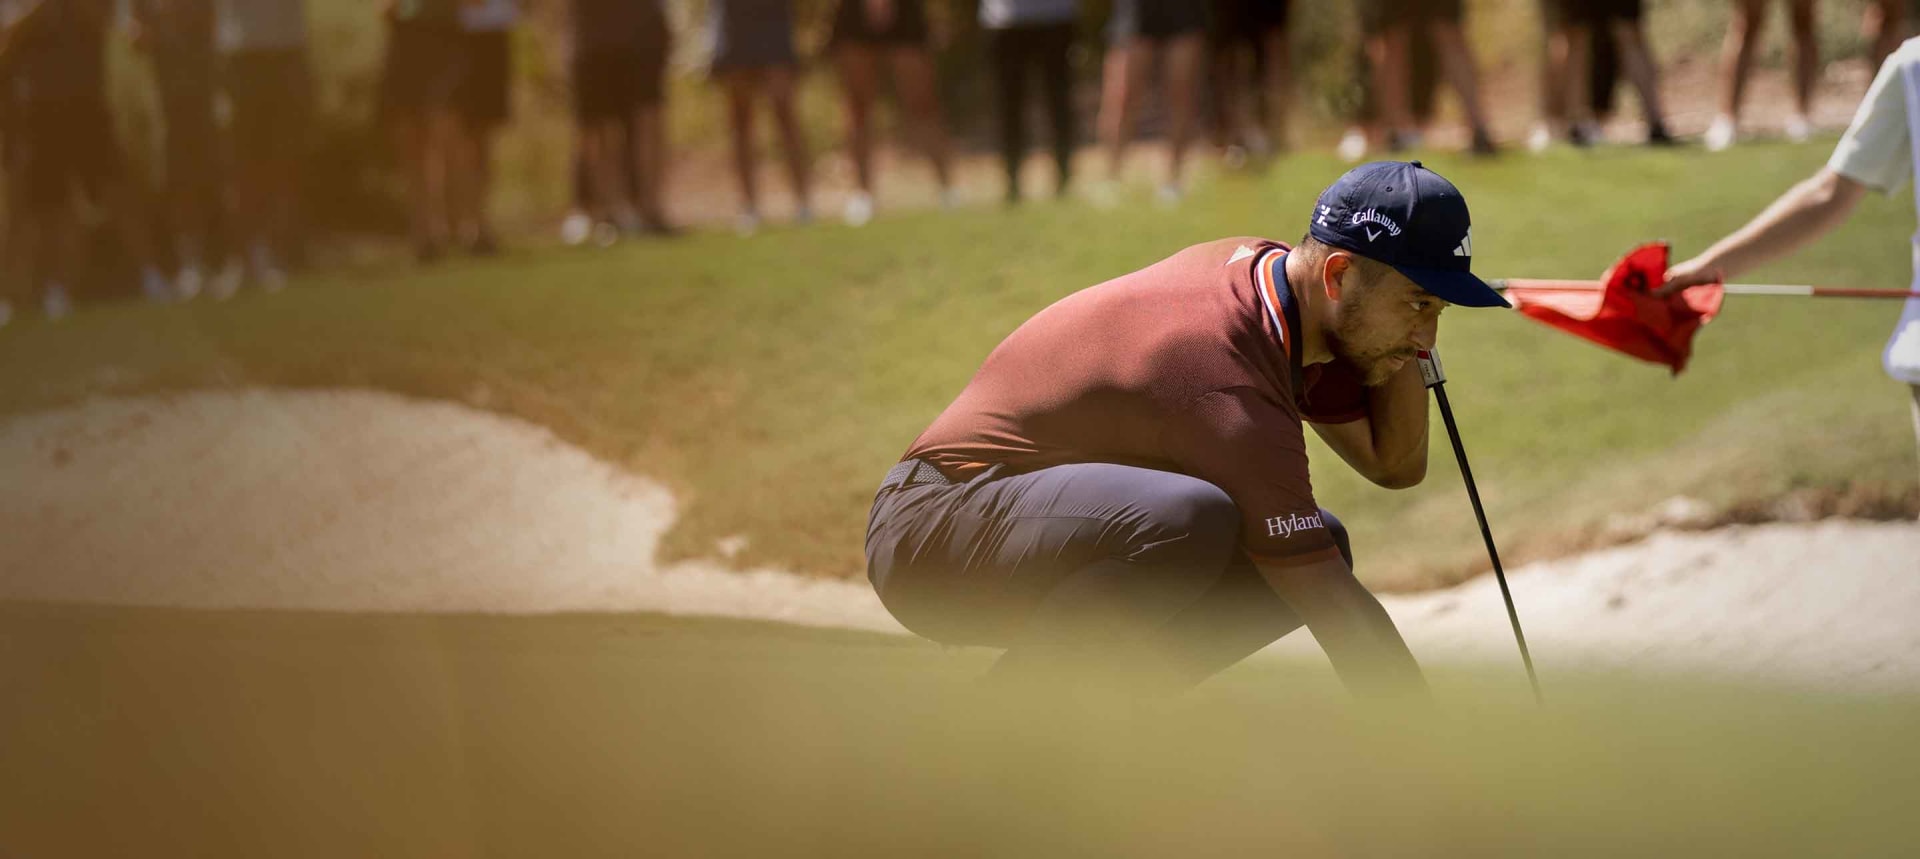 Professional Golfer, Xander Schauffele lines up a putt wearing ULTIMATE365 TOUR apparel.